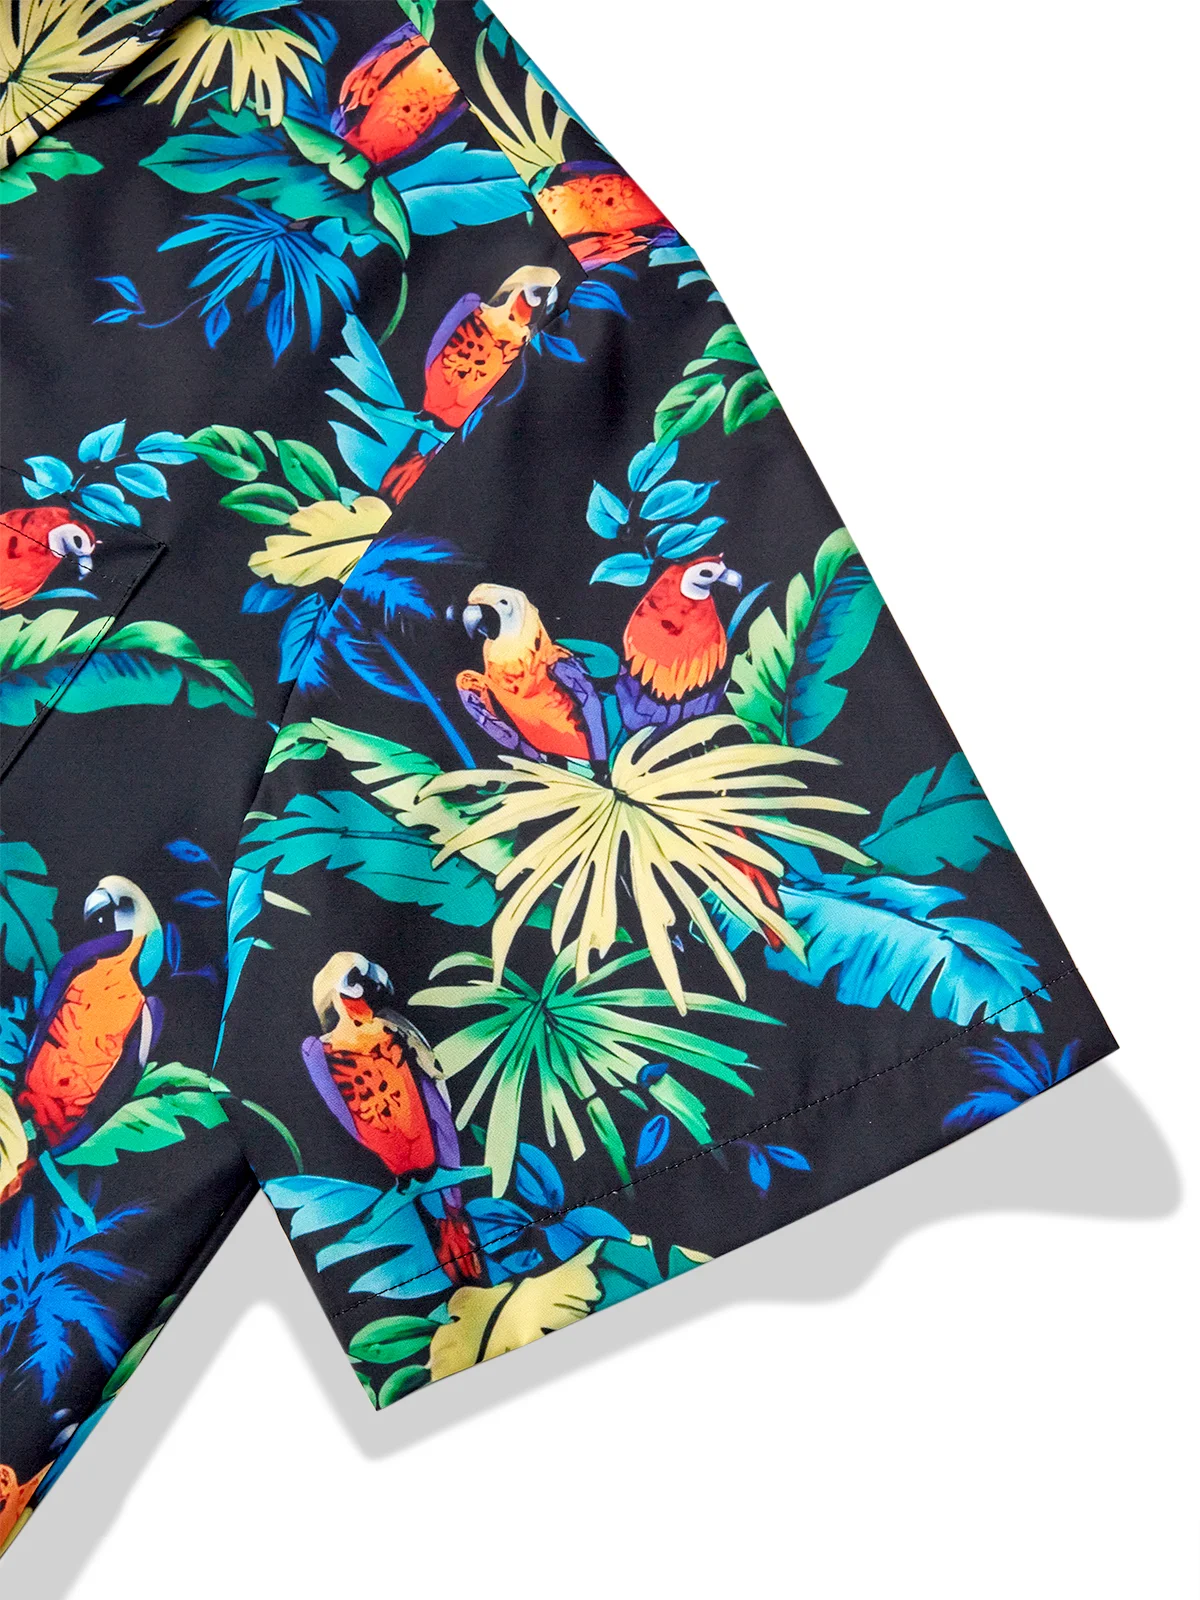 Royaura® Hawaiian Plant Leaf Parrot Printed Men's Button Pocket Short Sleeve Shirt